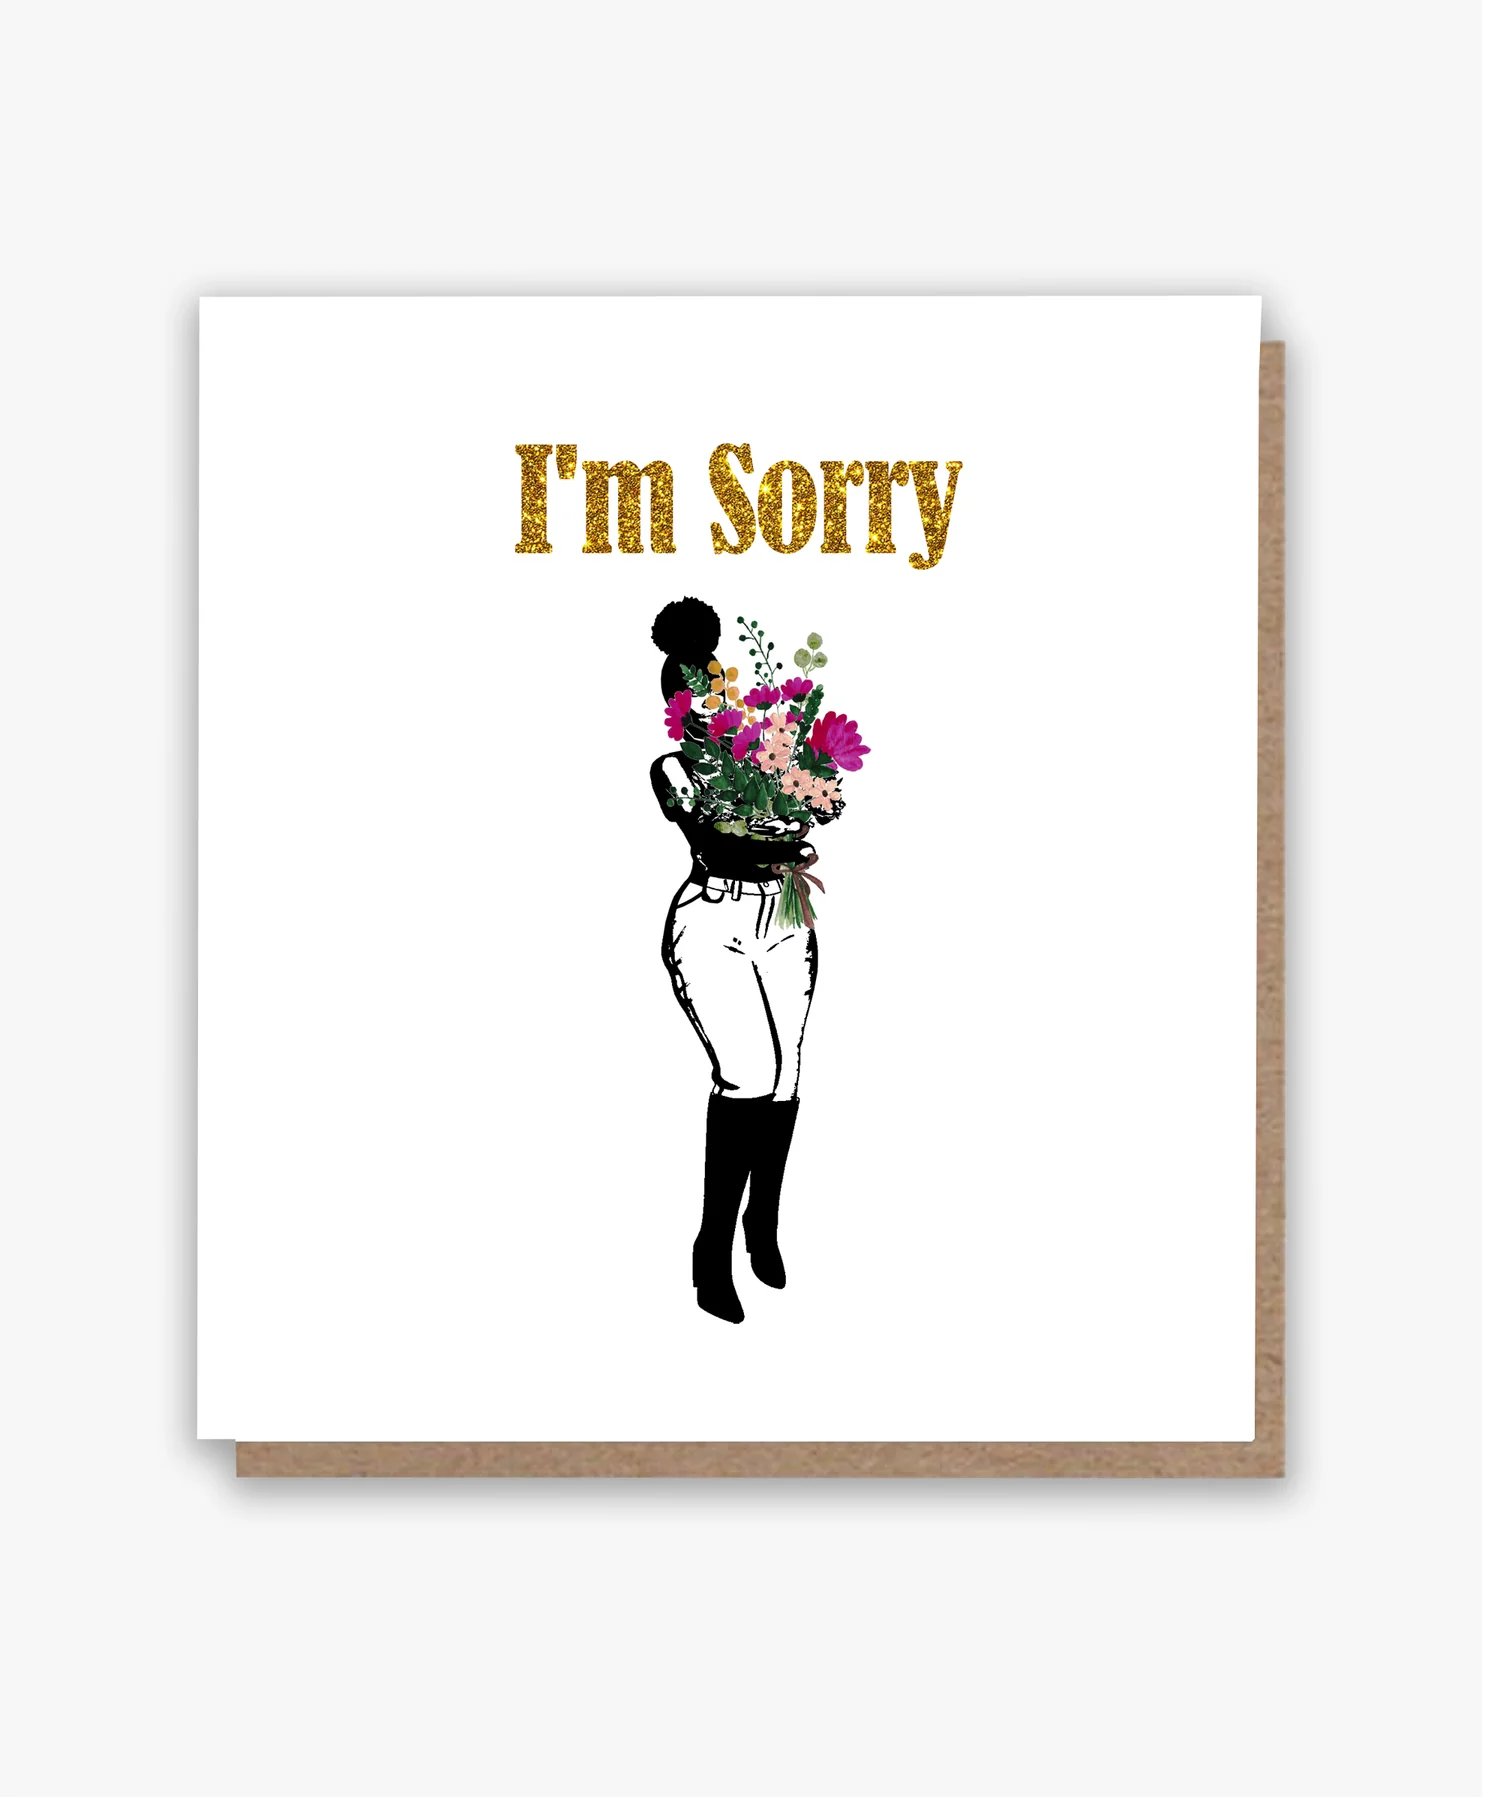 I’m Sorry! Card